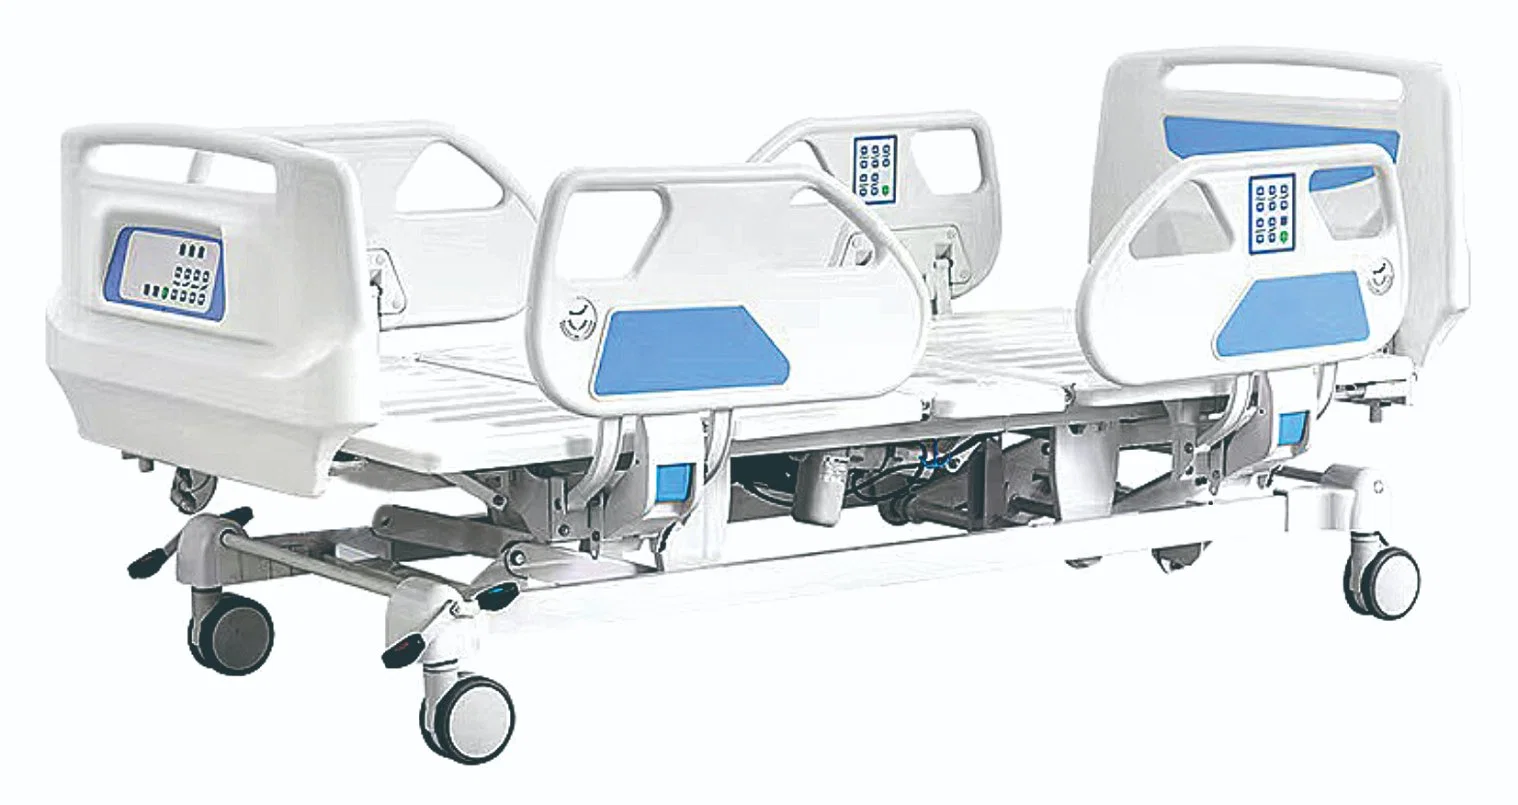 Adjustable Portable Casters Multifunction Folding Metal Medical Furniture Hospital Electric Bed Medical Equipment